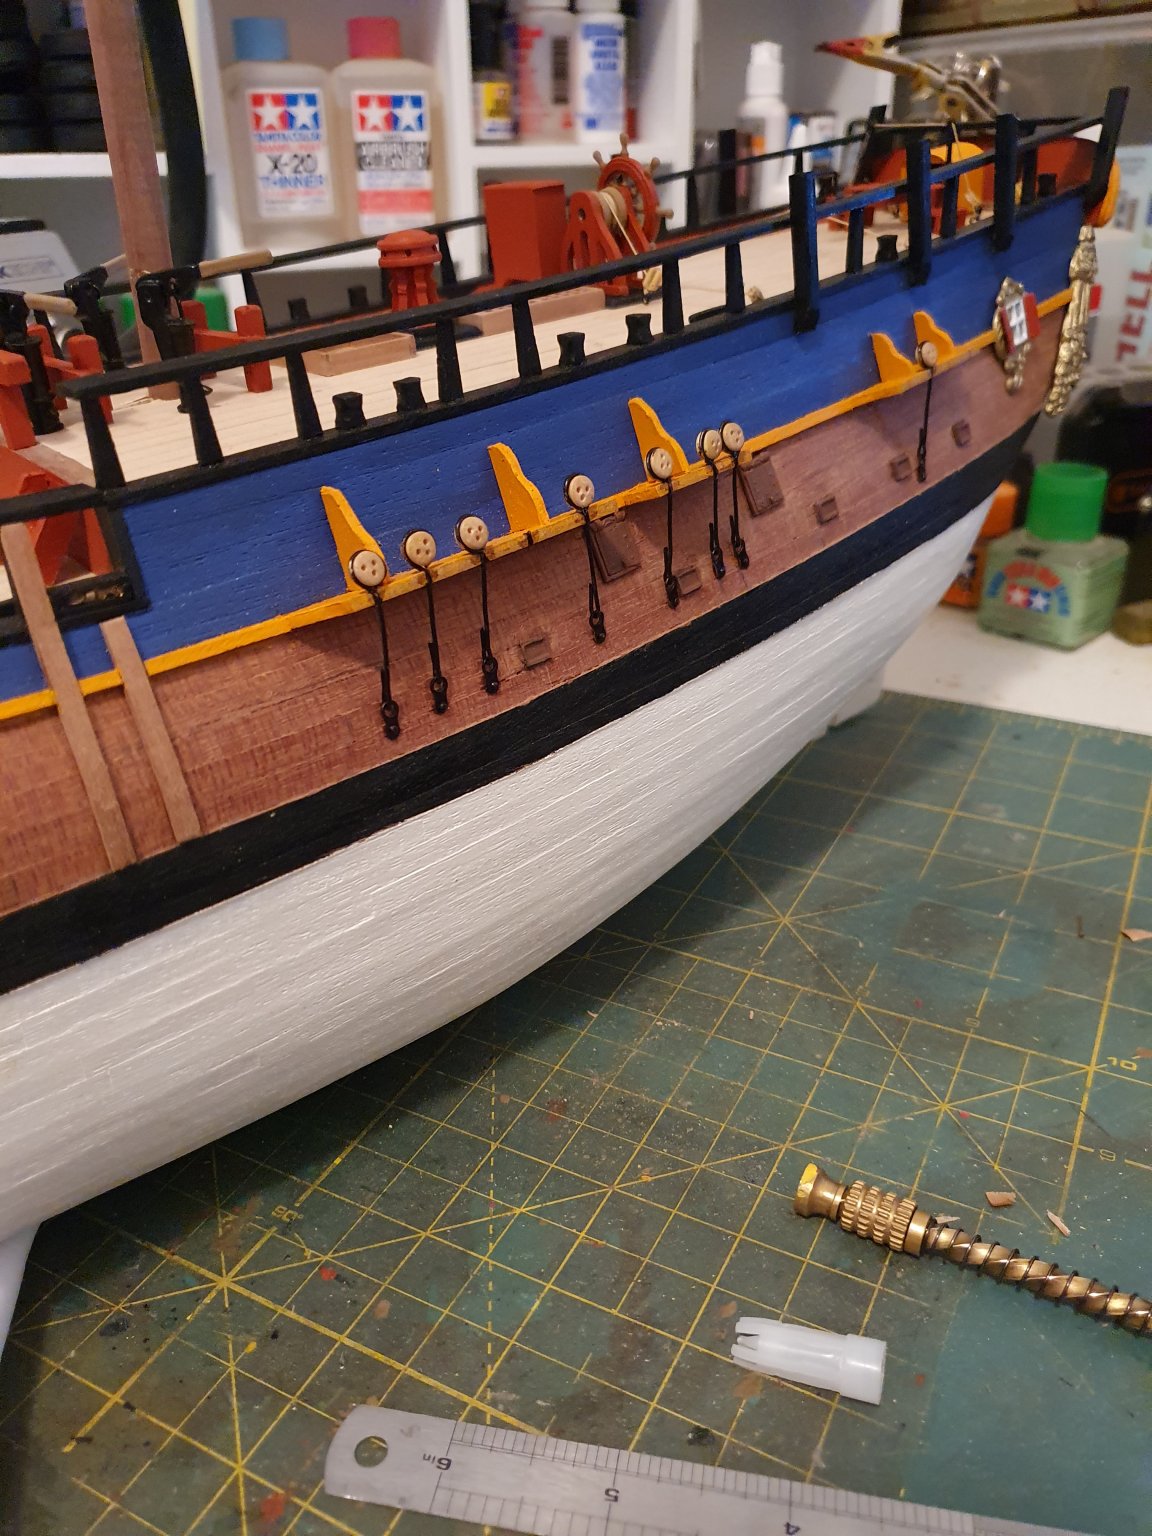 Artesania Latina HMS Endeavour Bark 1768 20600 – Swasey's Hardware & Hobbies